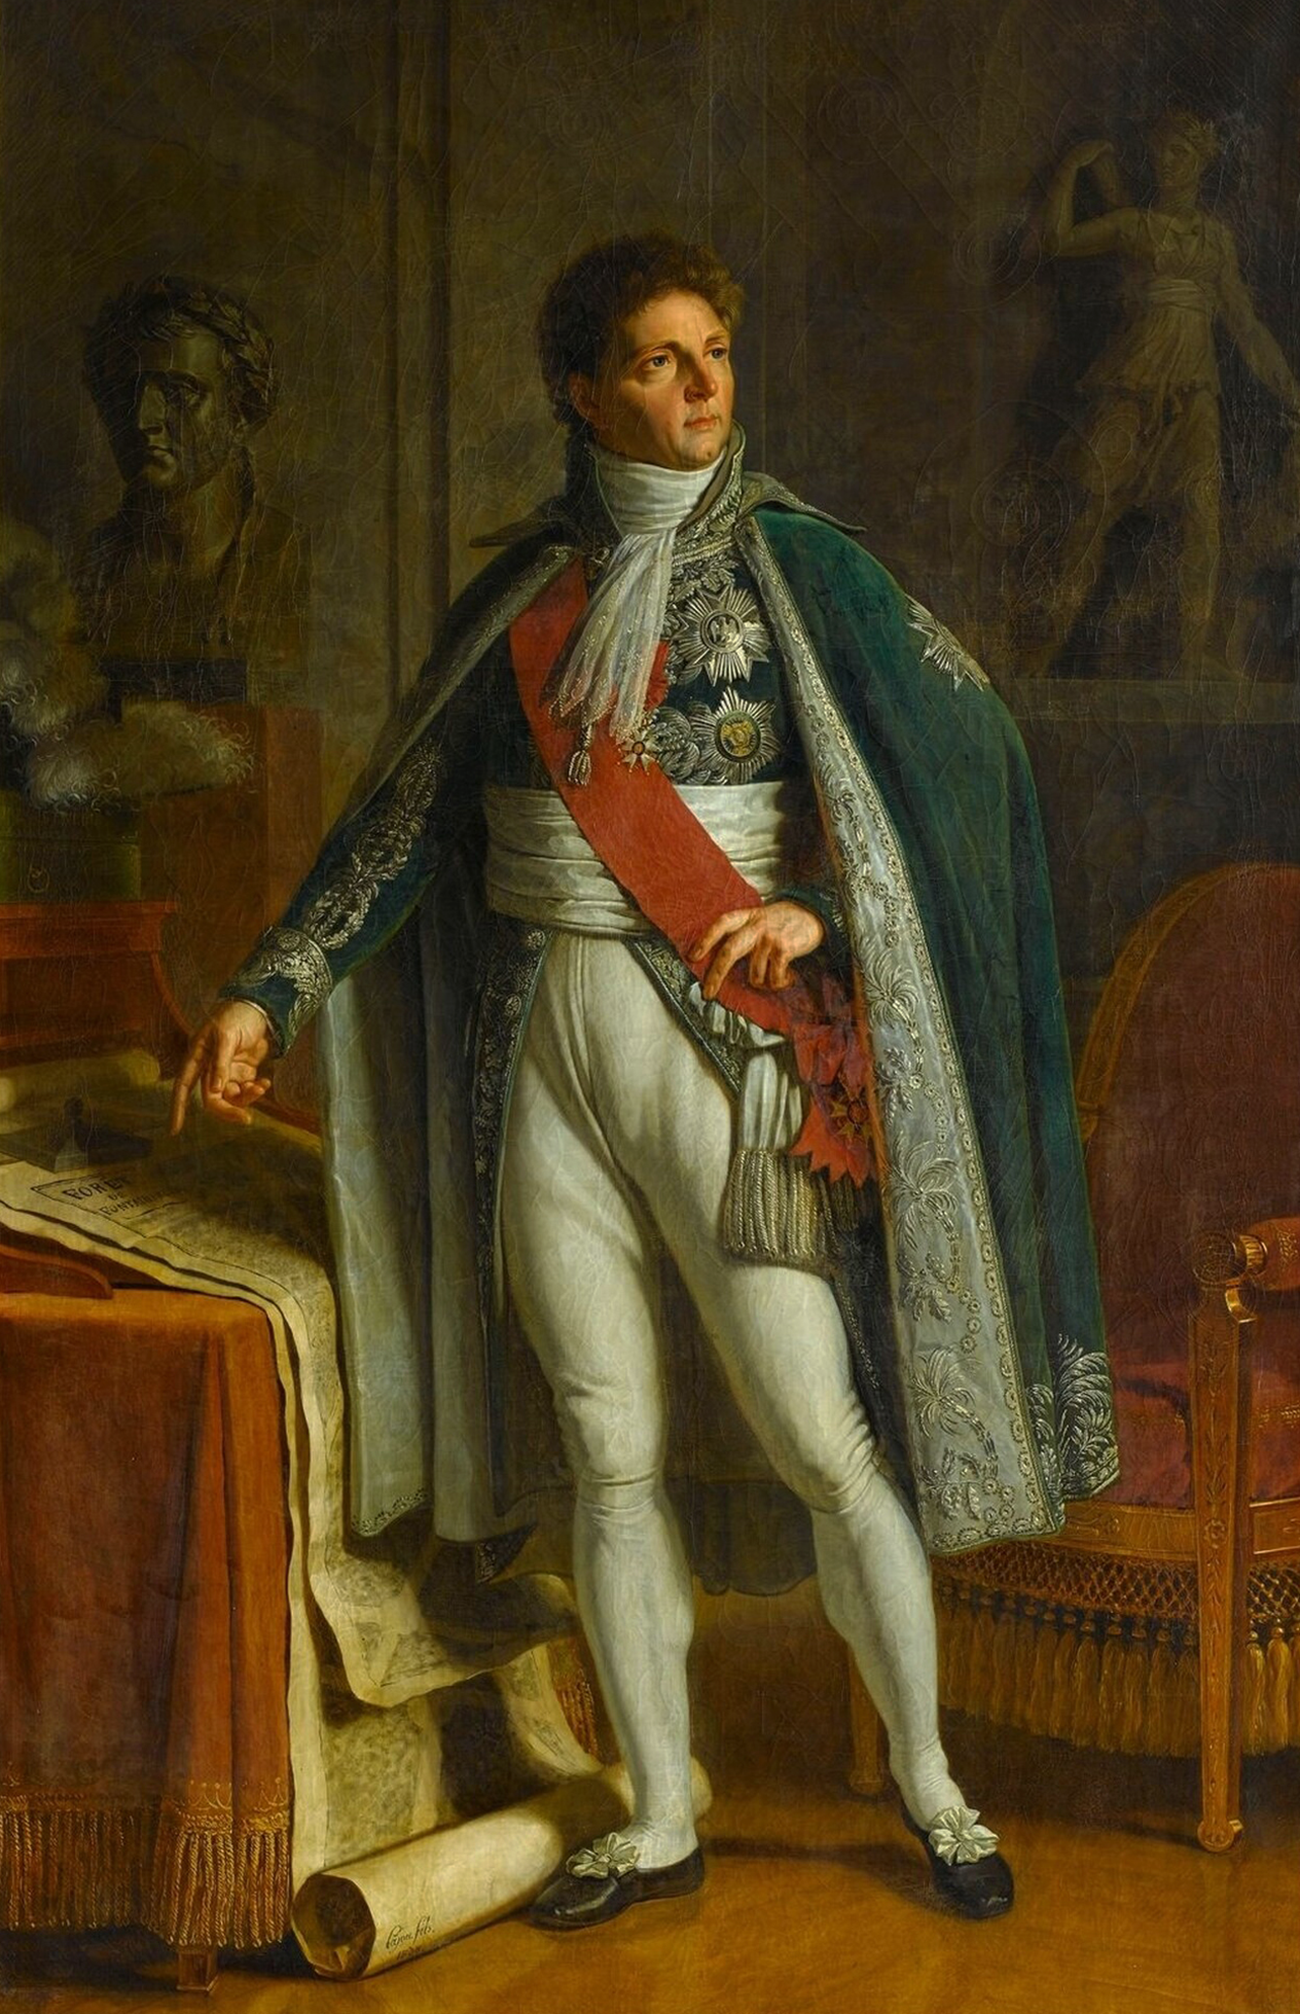 20 NOVEMBRE 1753: NASCITA DI LOUIS-ALEXANDRE BERTHIER